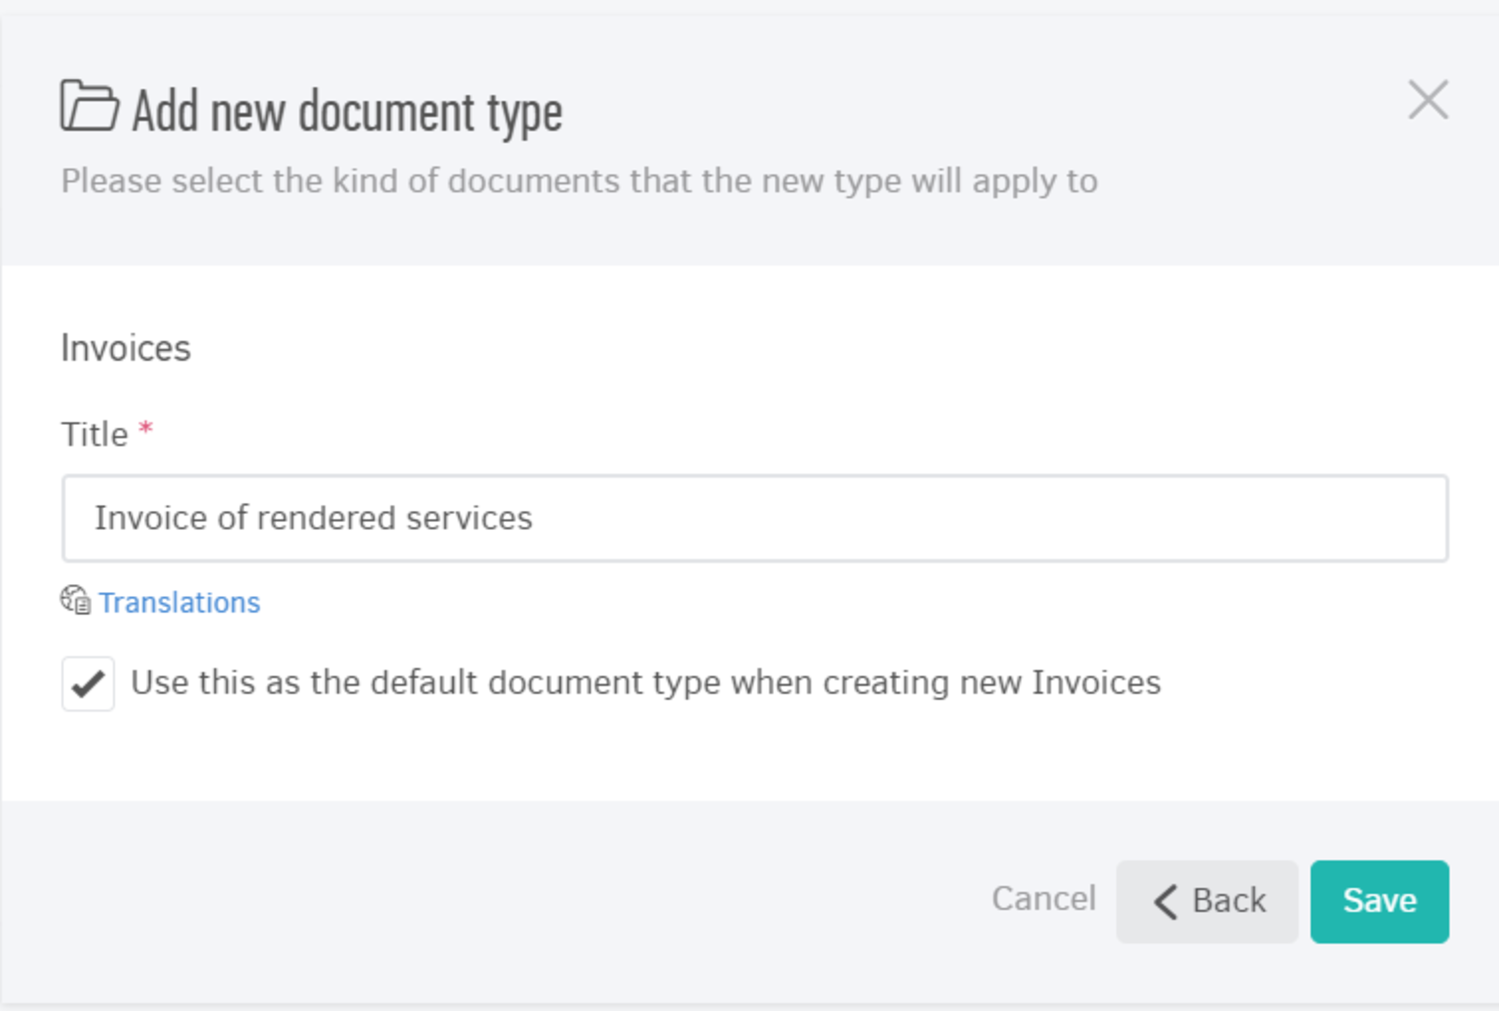 Add new document type - Step 2